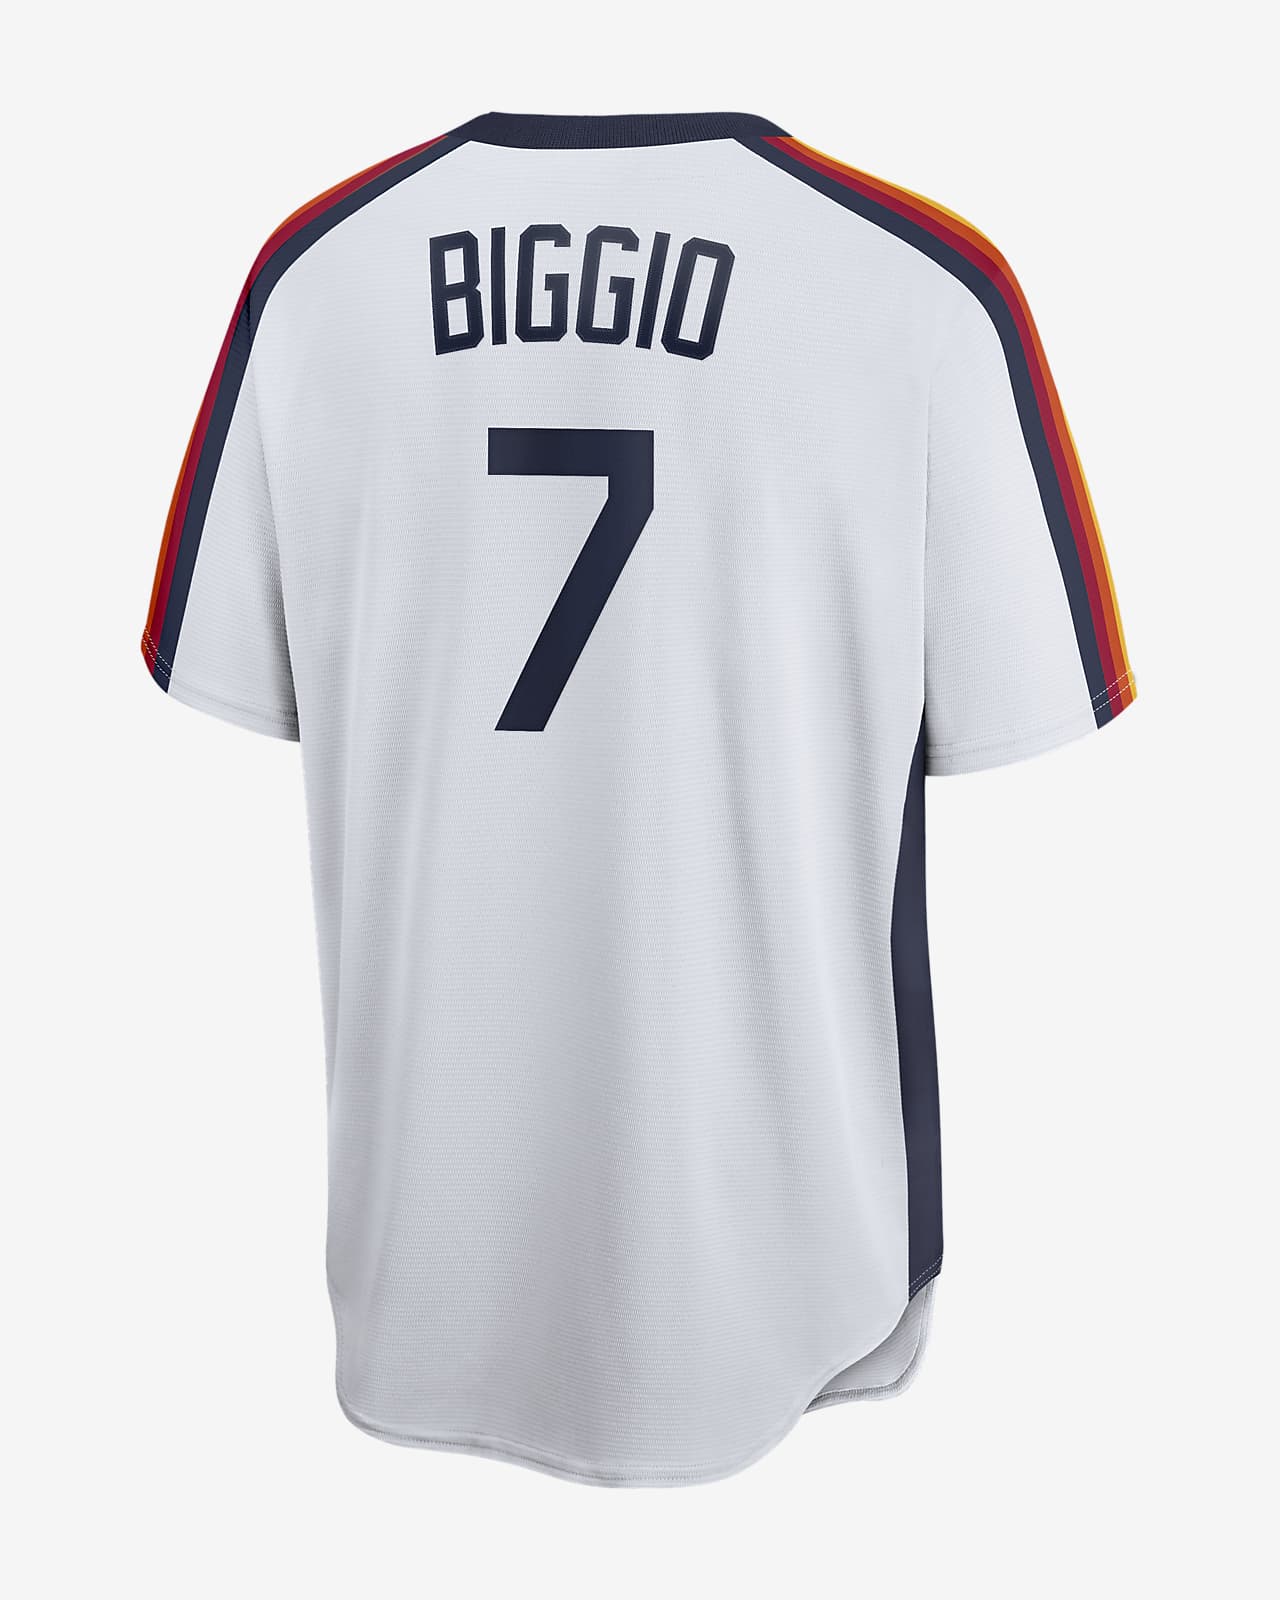 craig biggio shirt